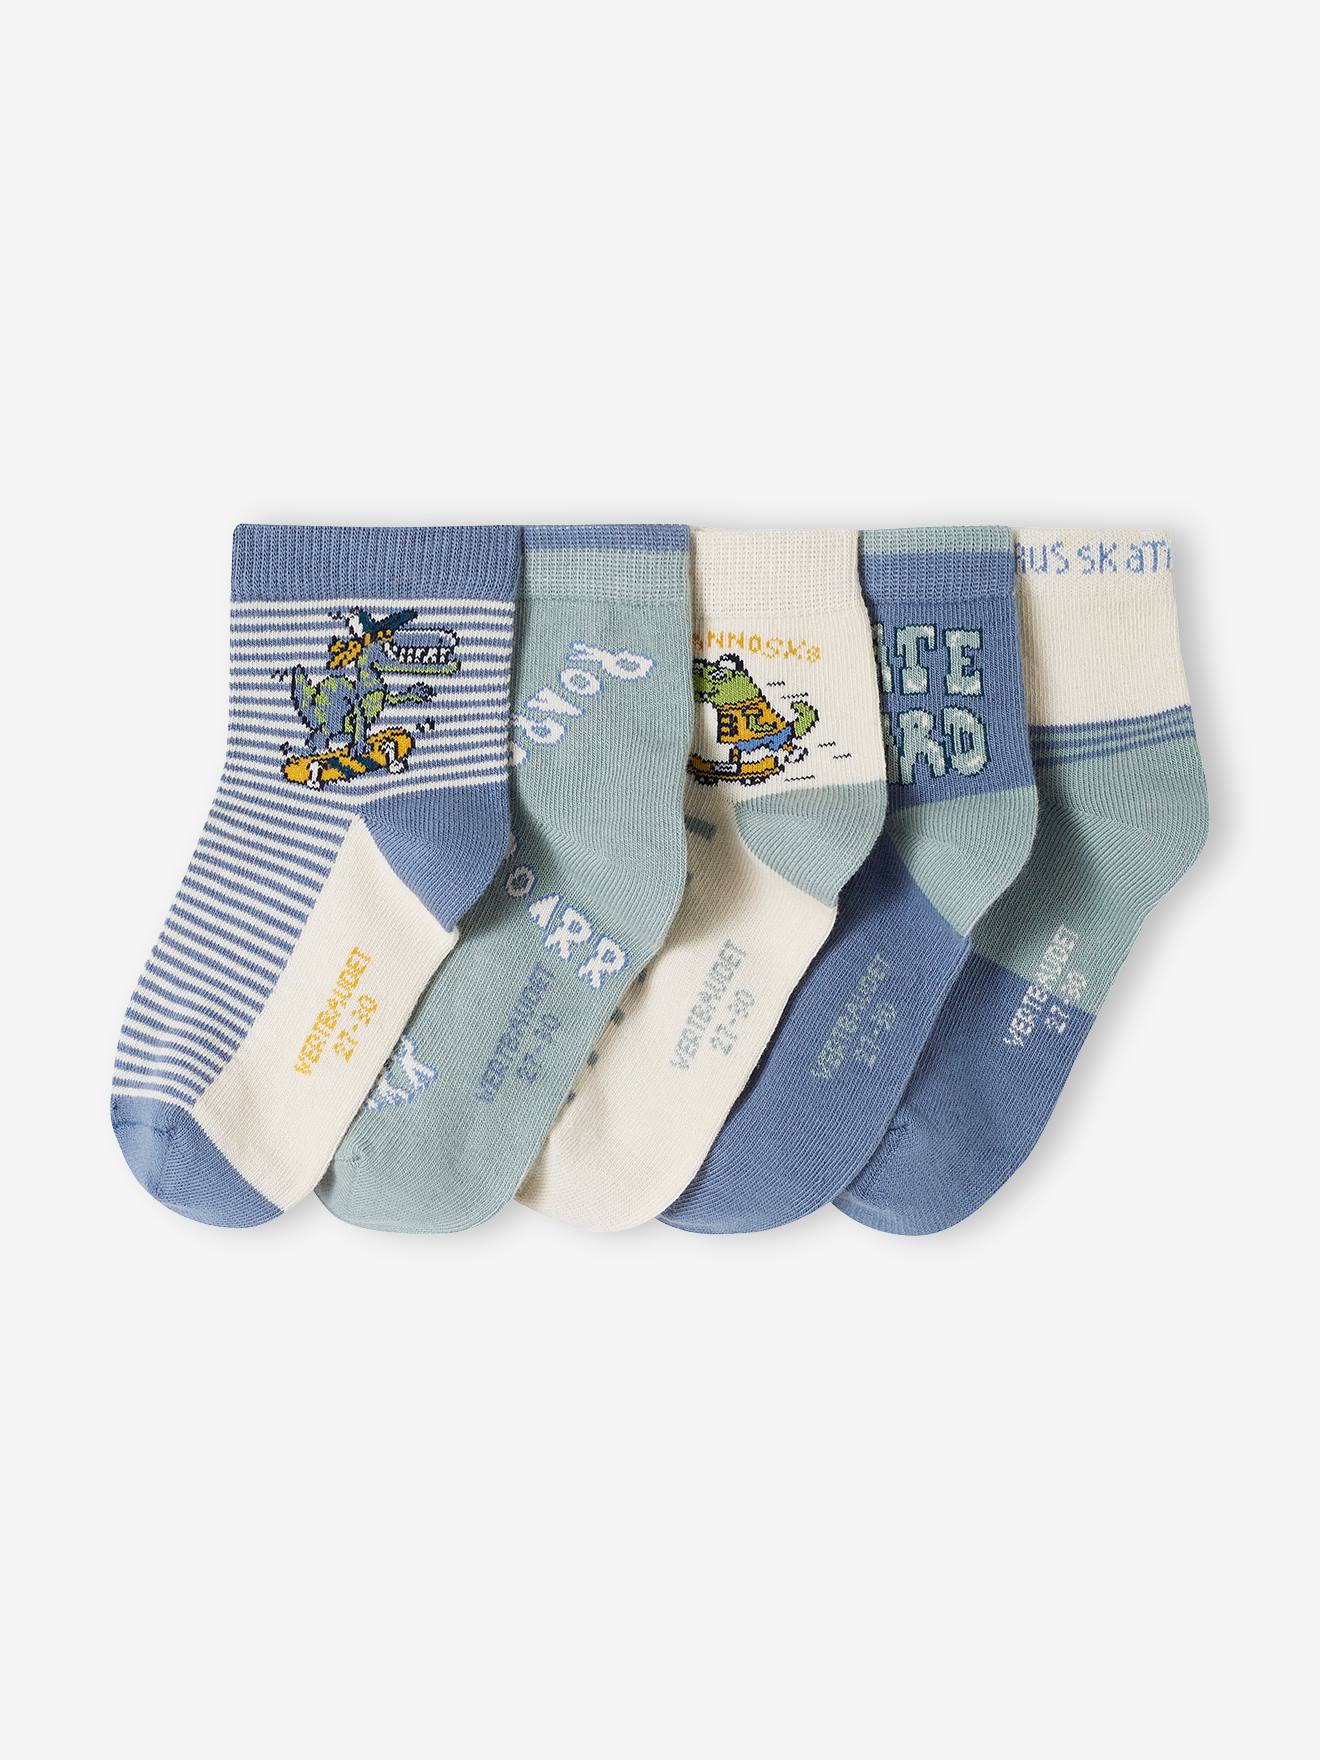 Pack of 5 Pairs of "Tyrannoskate" Socks for Boys aqua green